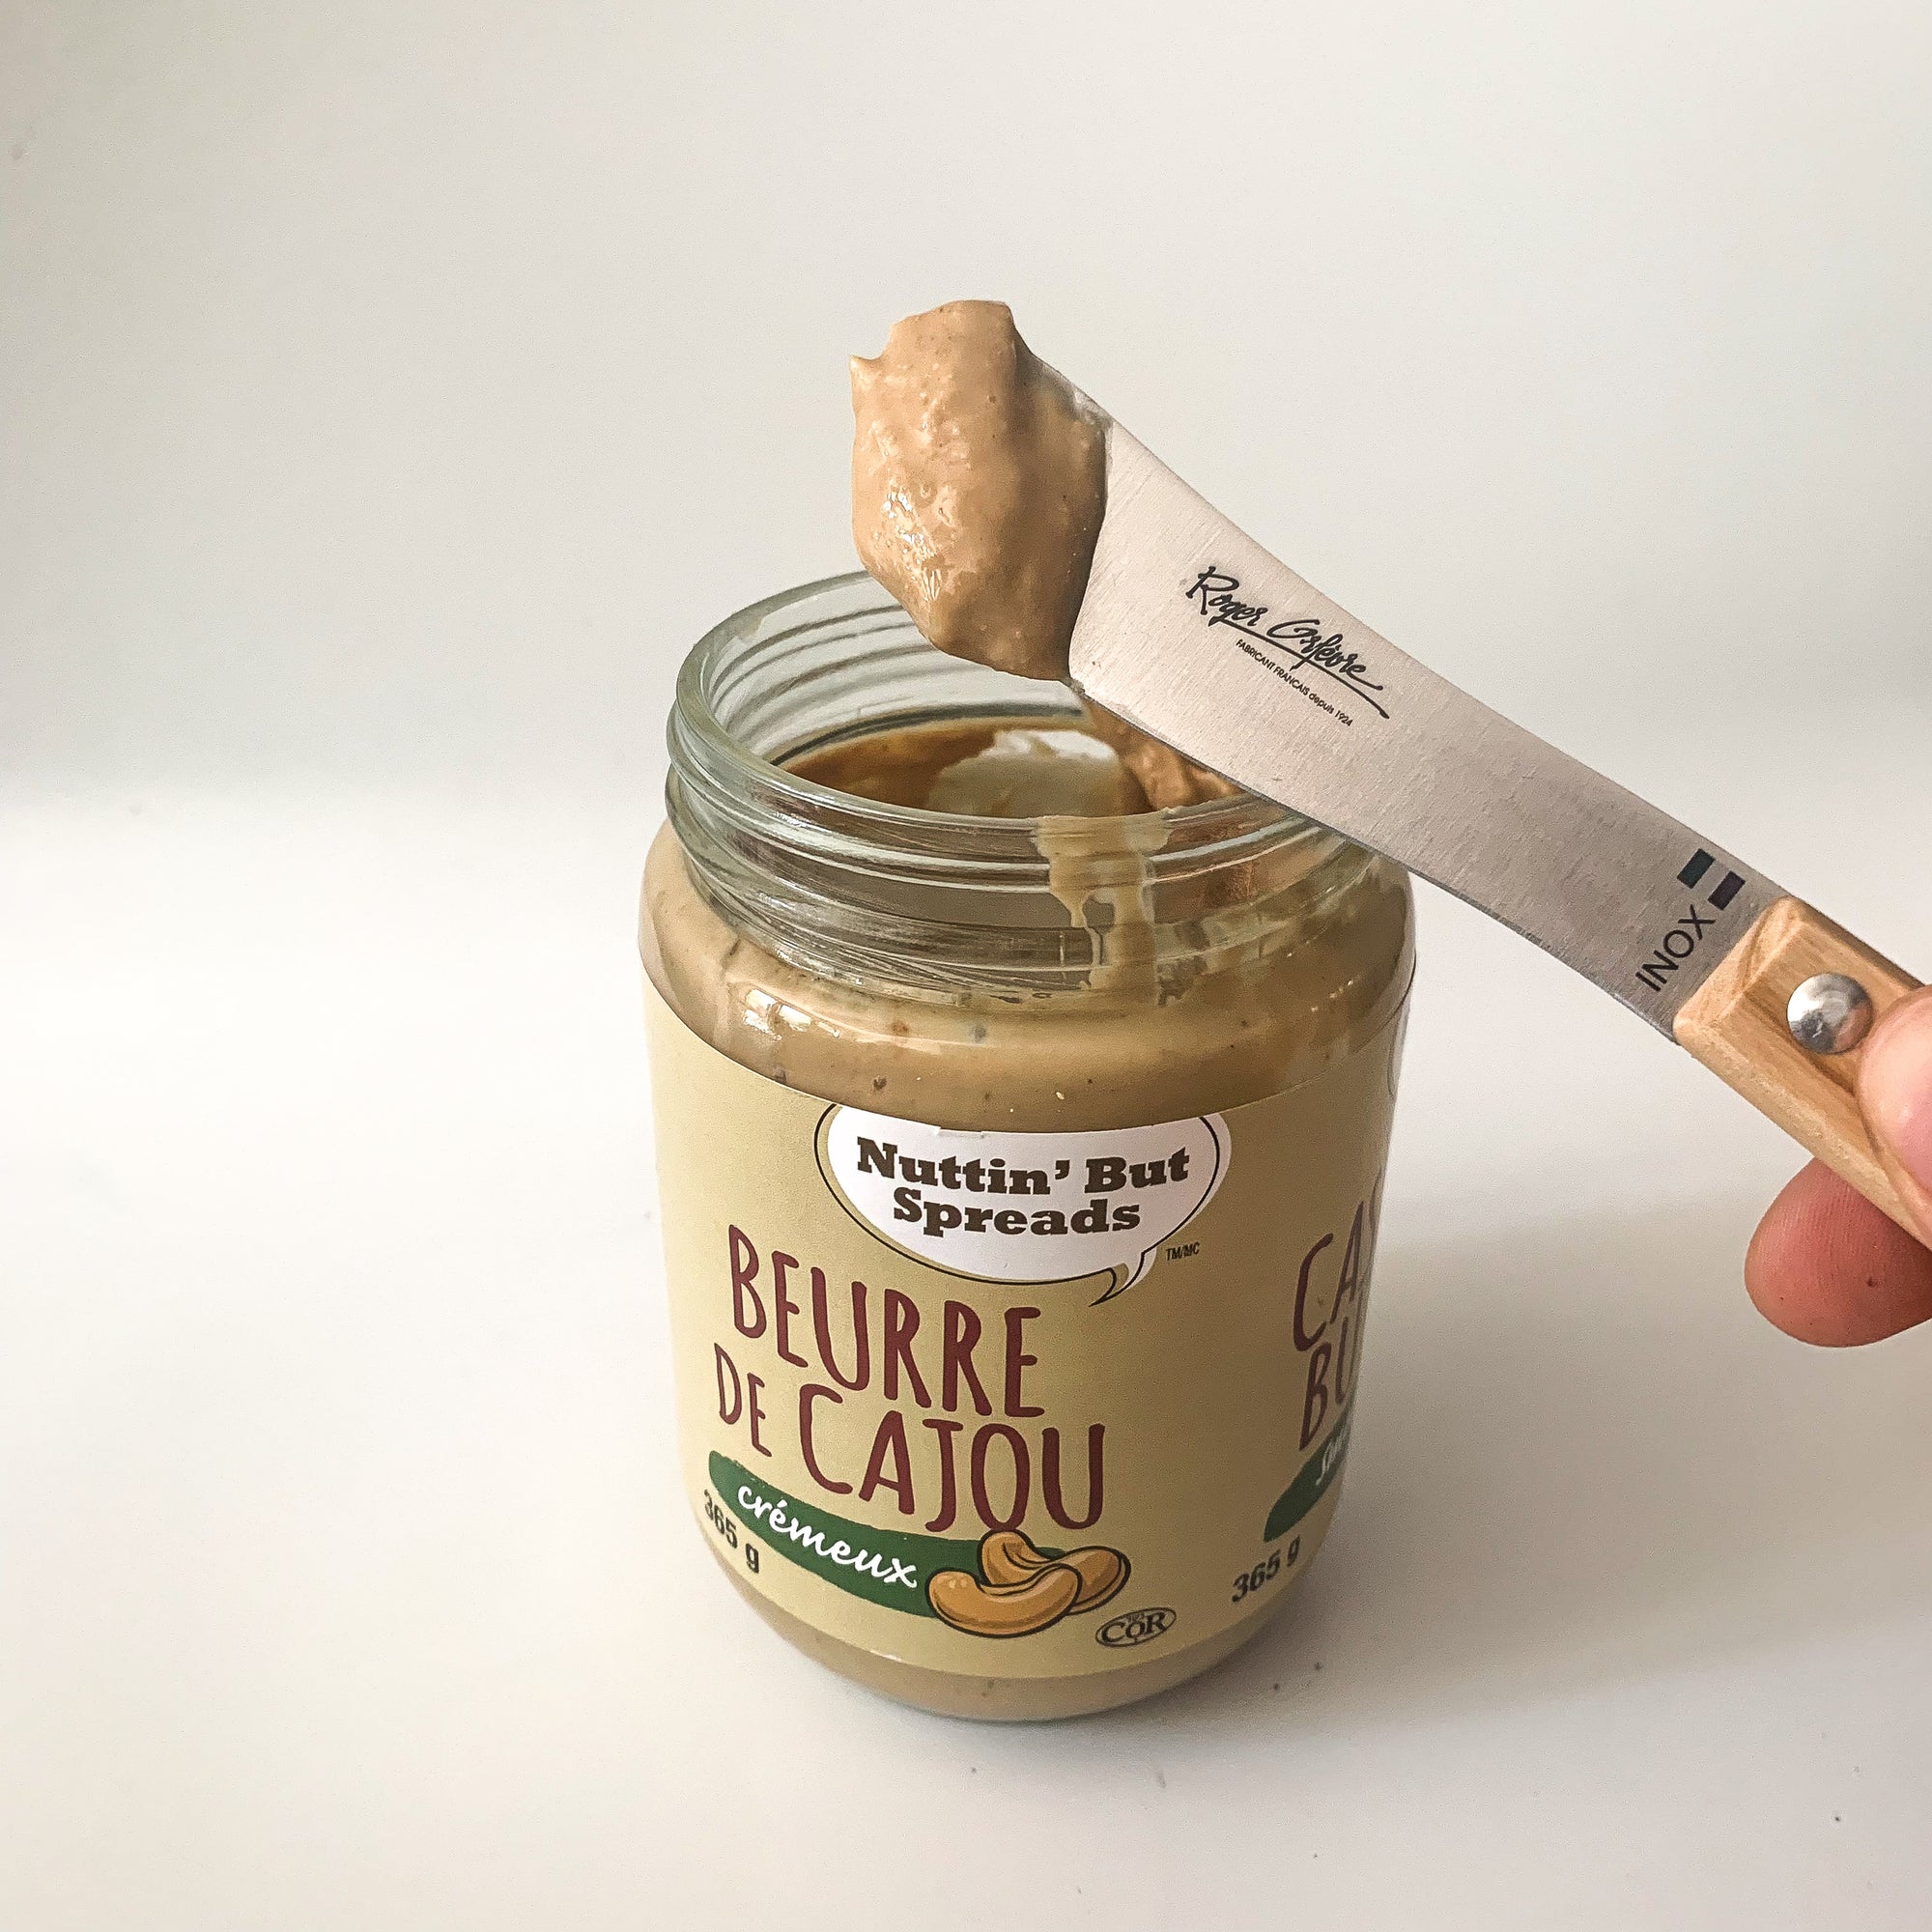 roger orfevre canada butter knife olive wood handle made in france